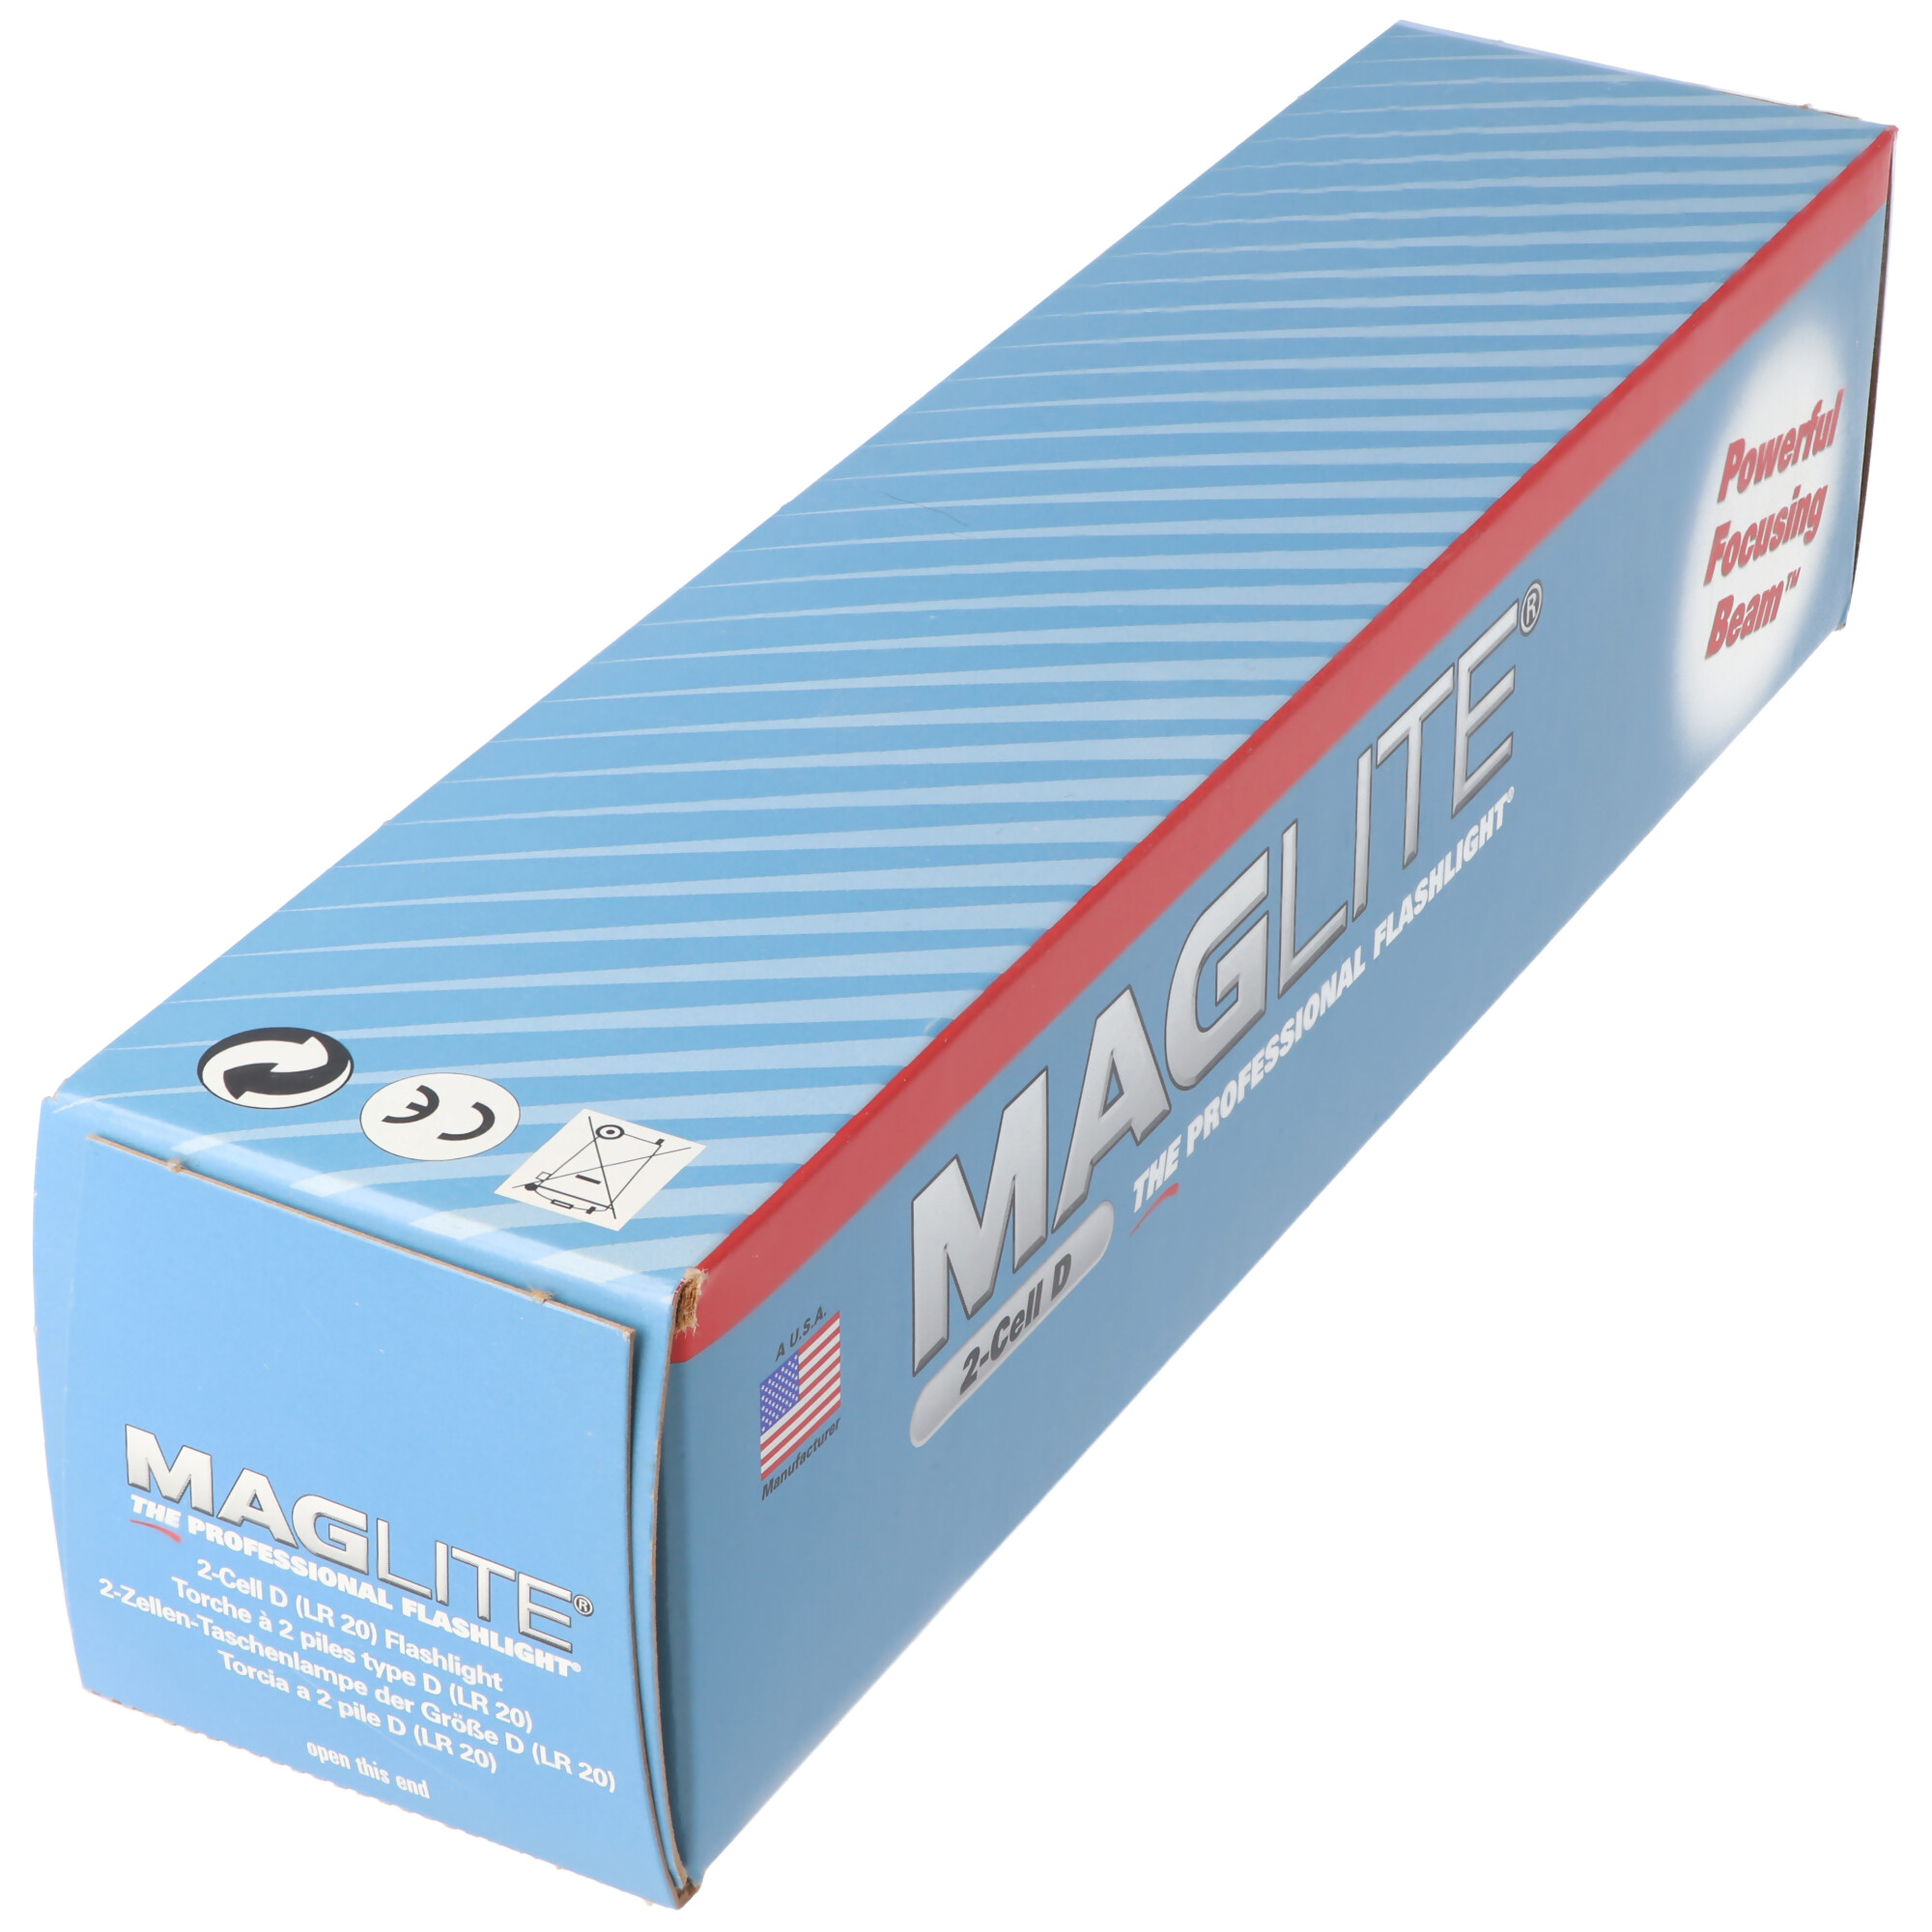 Maglite 2 D-Cell Stablampe 25,0 cm titan-grau im Karton